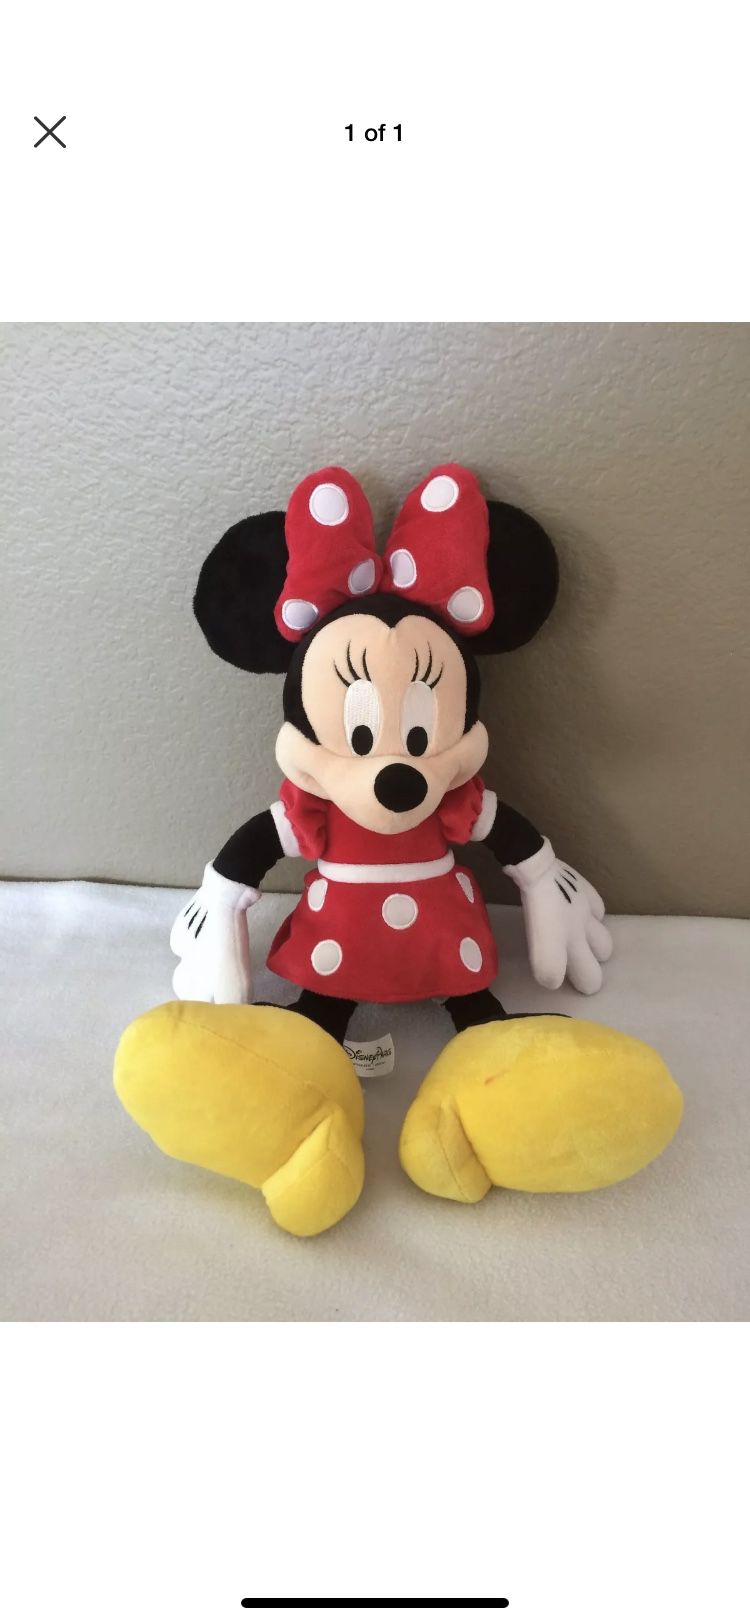 Disney Minnie Mouse 18 Inch Plush Stuffed Animal Red Dress Polka Dots